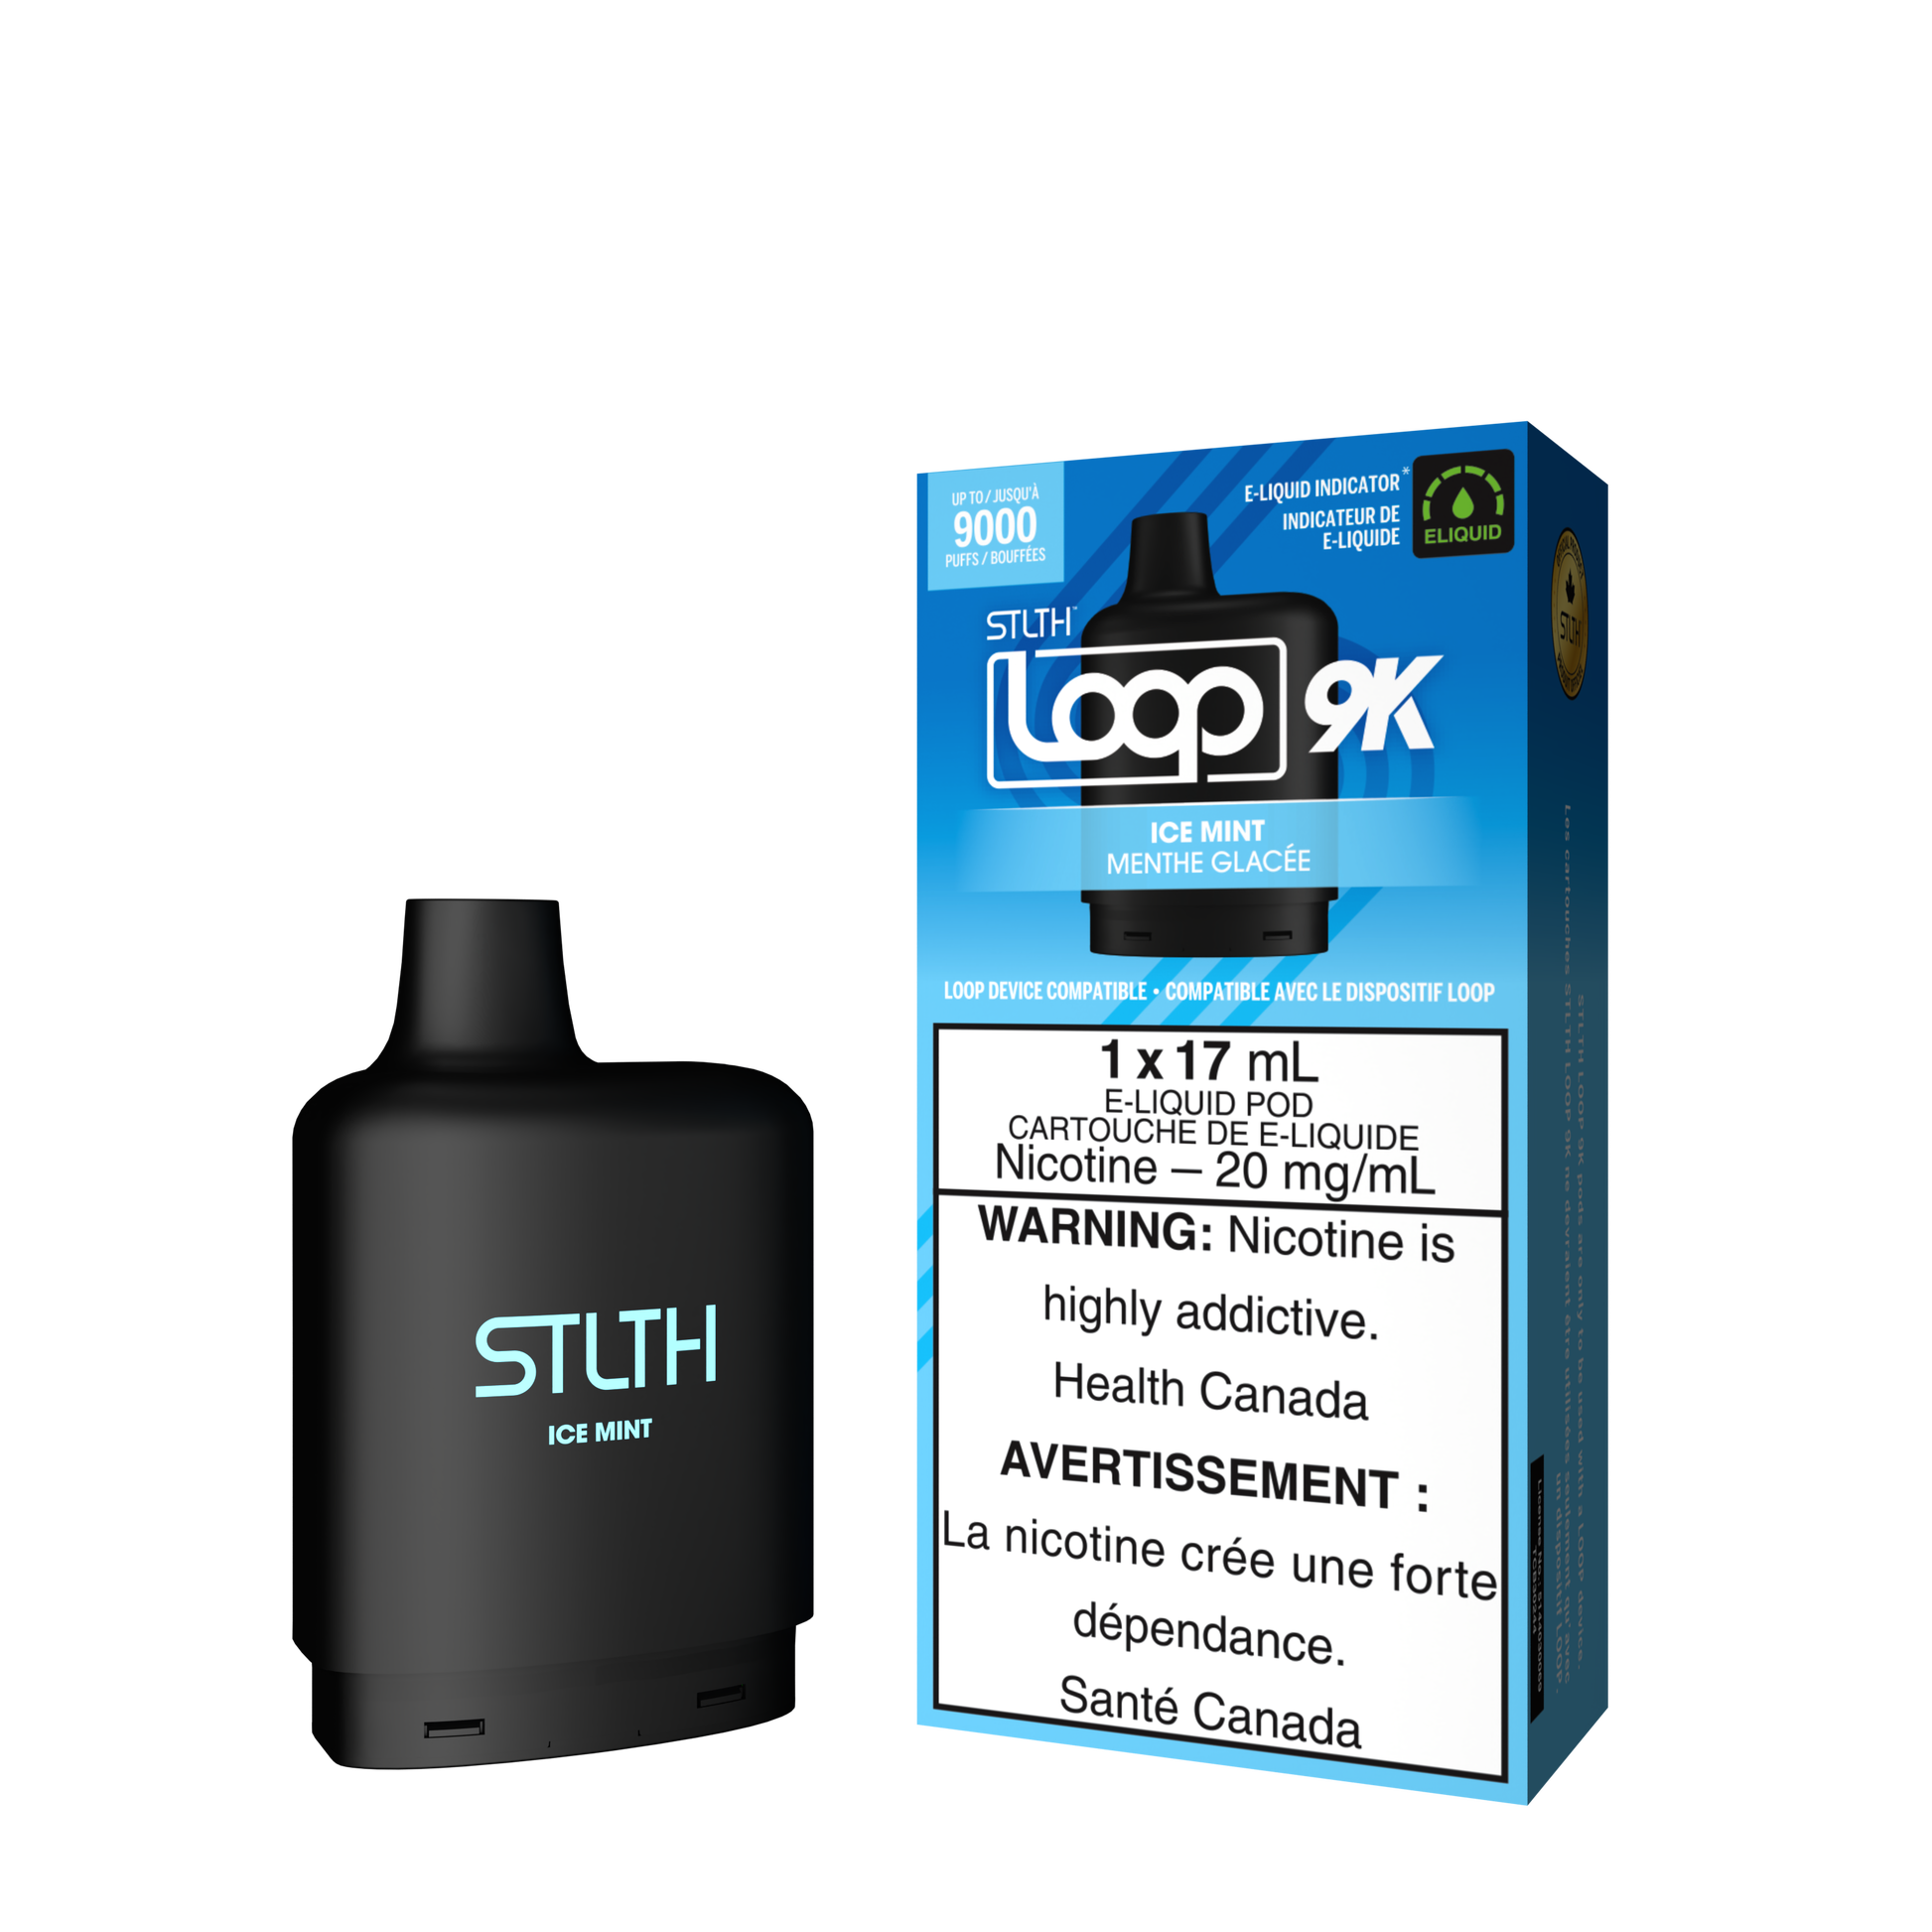 STLTH LOOP 9K Pod Pack - Ice Mint